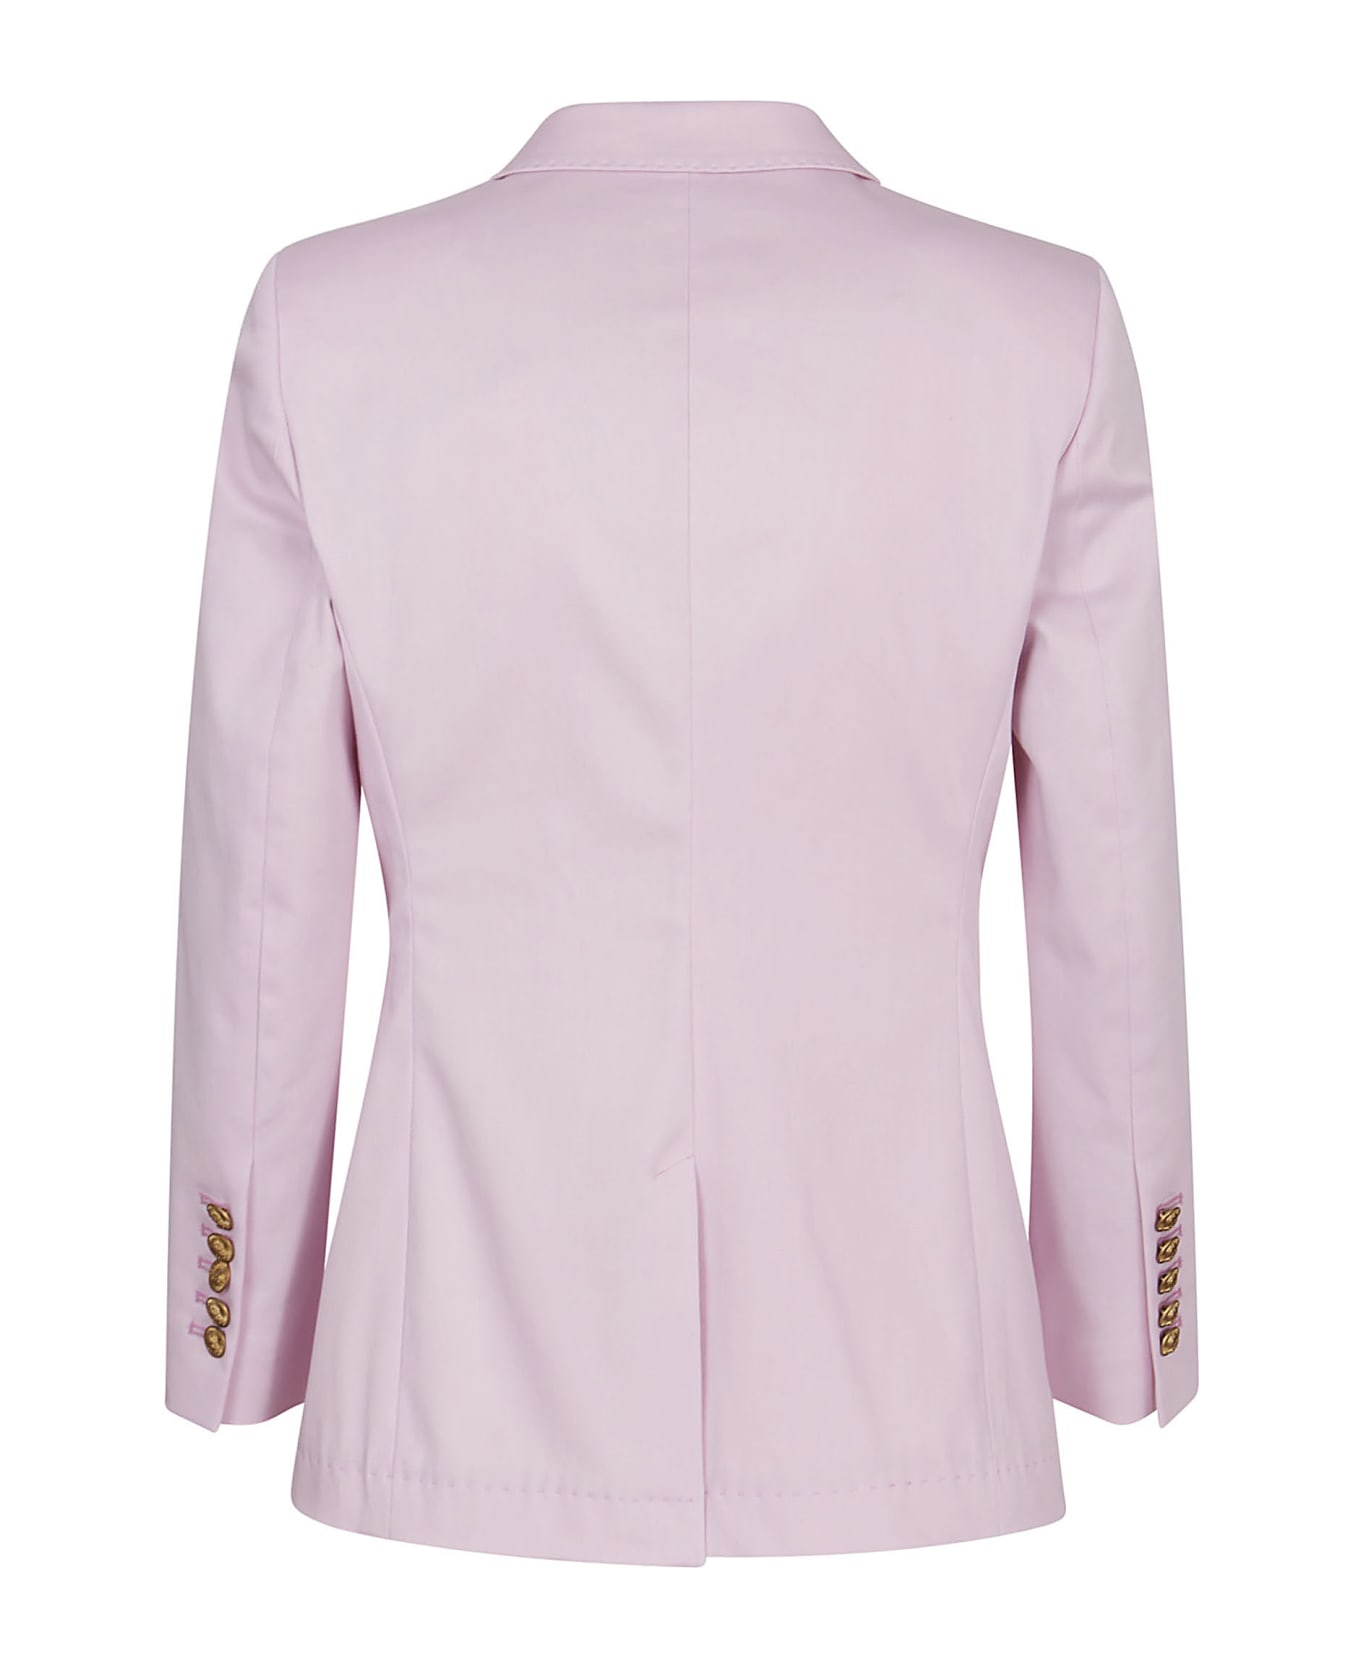 Saulina Milano Adelaide Jacket - Pink